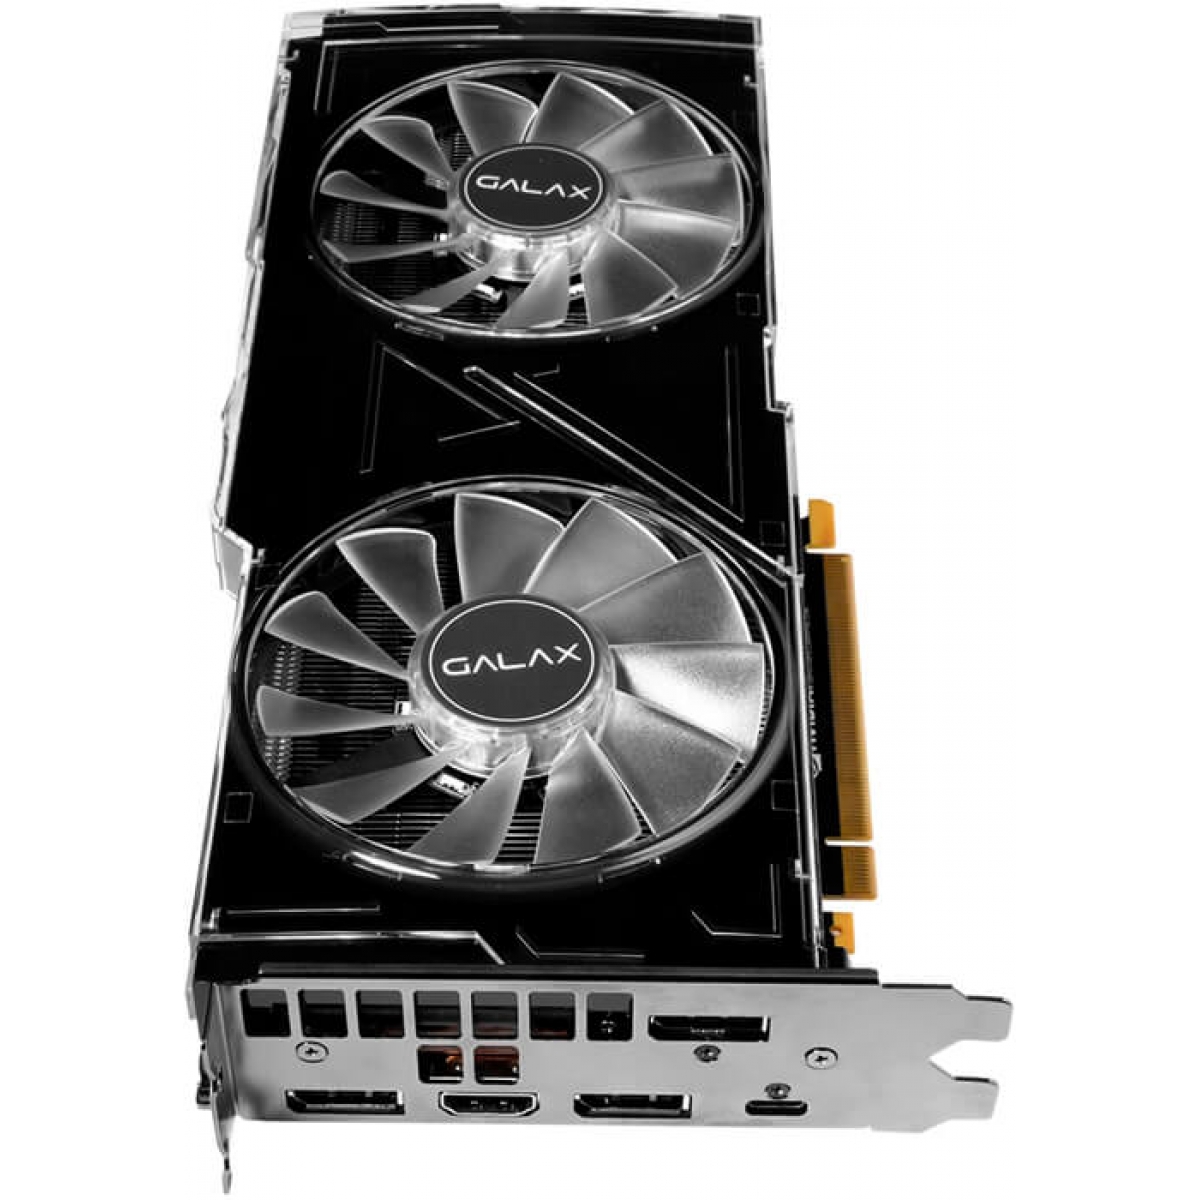 Placa de Vídeo Galax NVIDIA GeForce RTX 2080 Ti Dual Black, 11GB, GDDR6, 28IULBUCT4ND